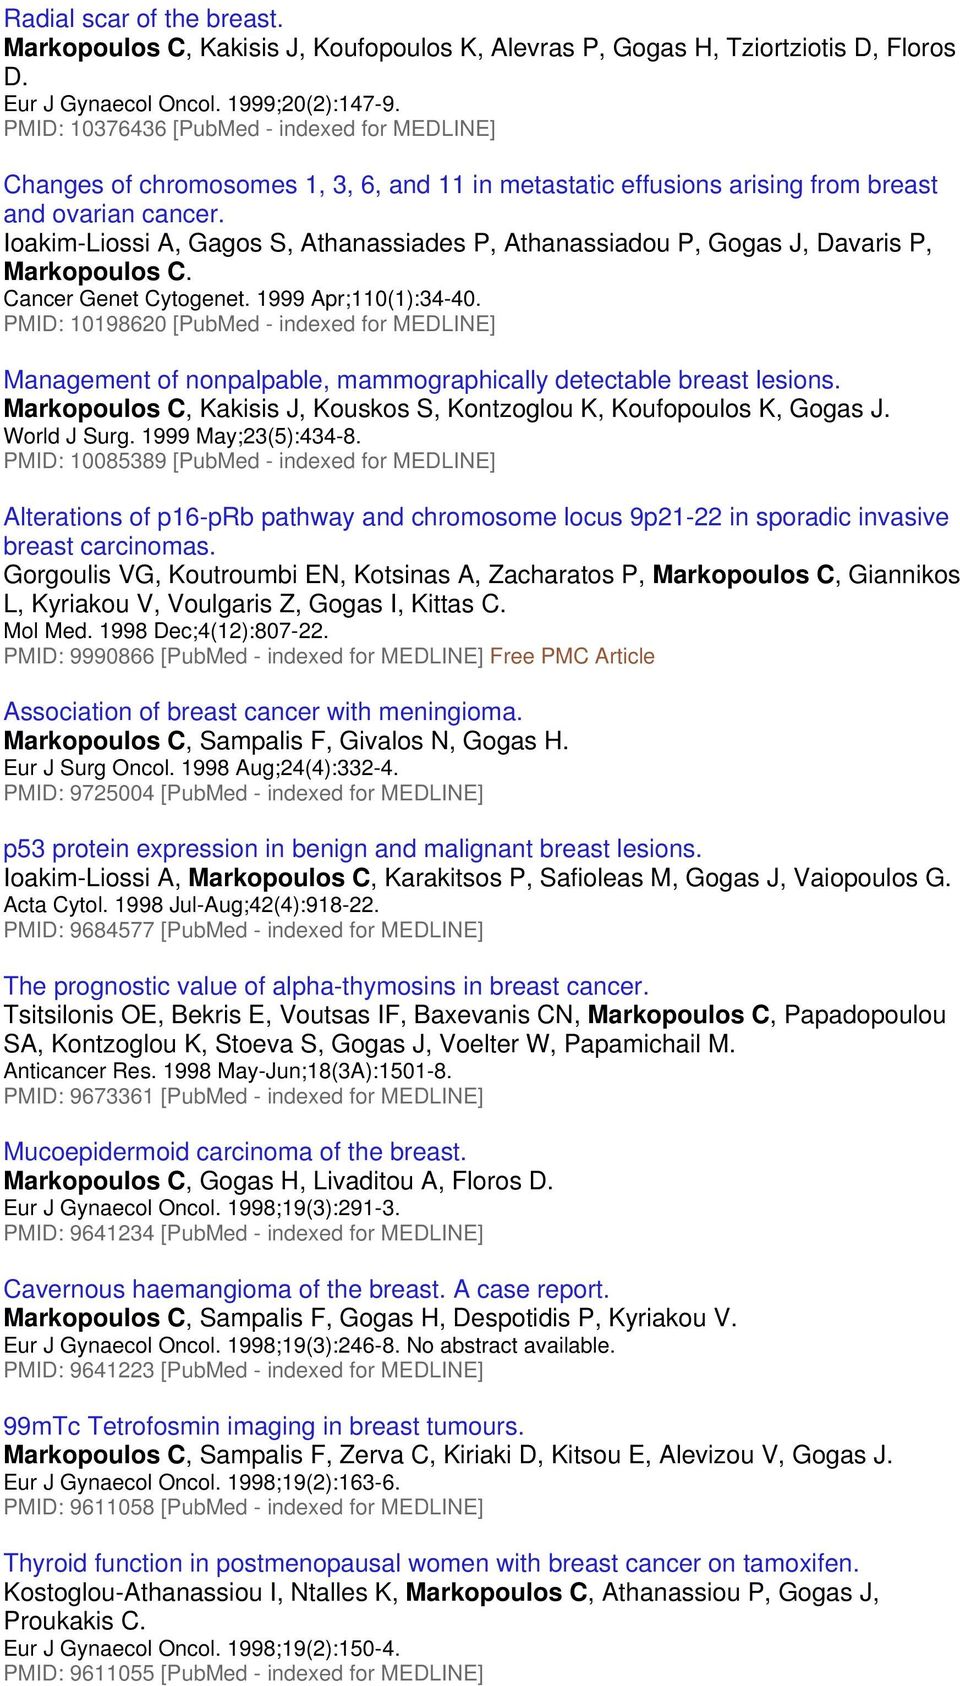 Ioakim-Liossi A, Gagos S, Athanassiades P, Athanassiadou P, Gogas J, Davaris P, Markopoulos C. Cancer Genet Cytogenet. 1999 Apr;110(1):34-40.